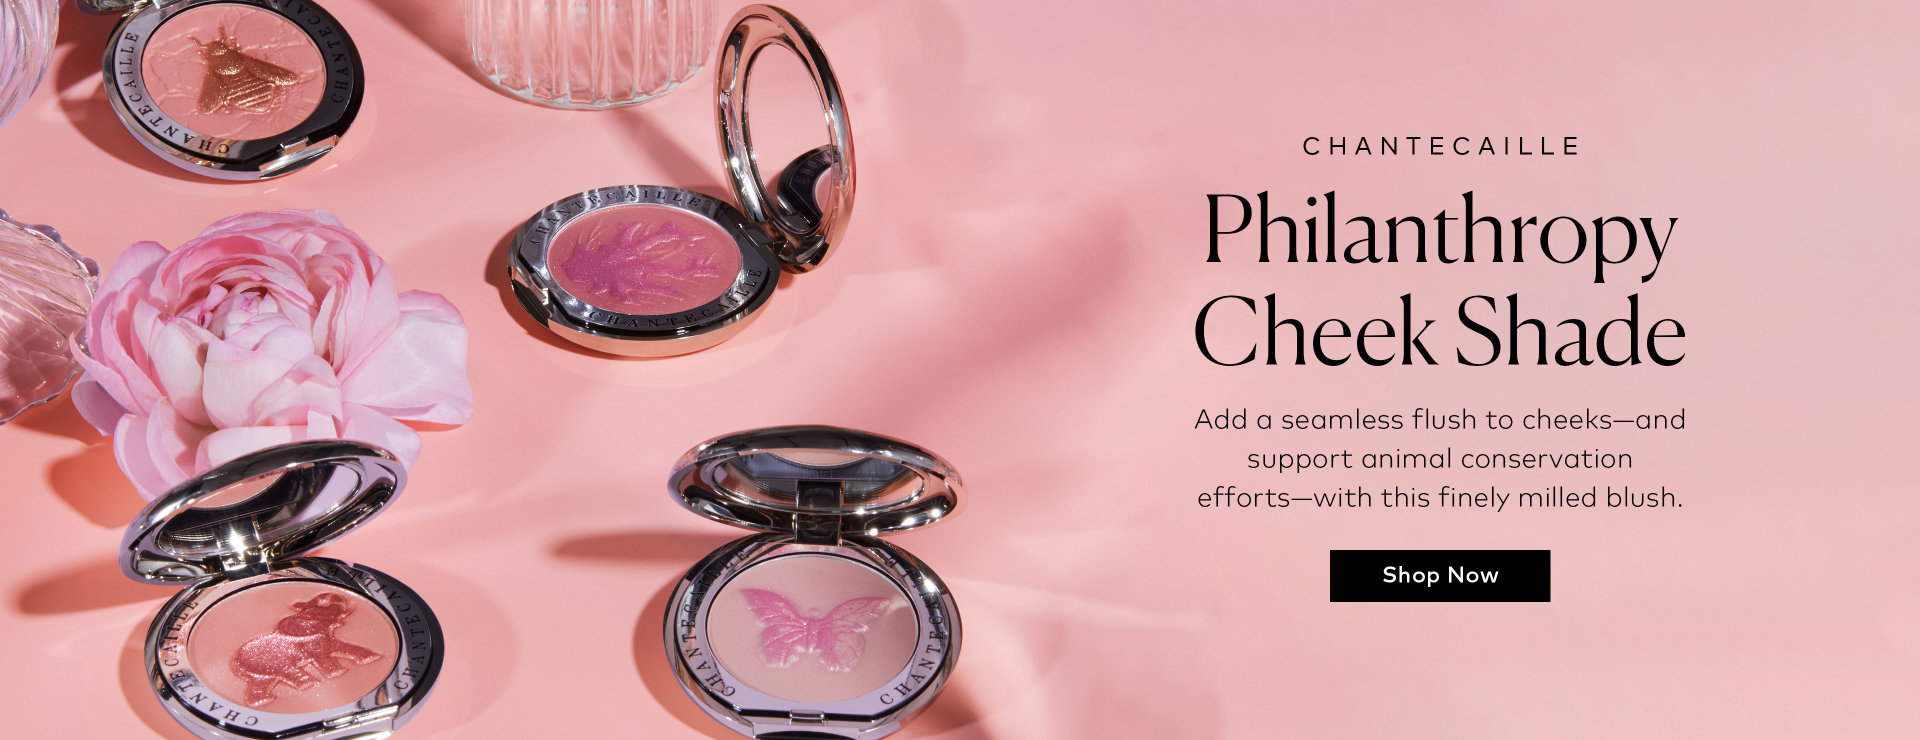 Shop the Chantecaille's Philanthropy Cheek Shades on Beautylish.com